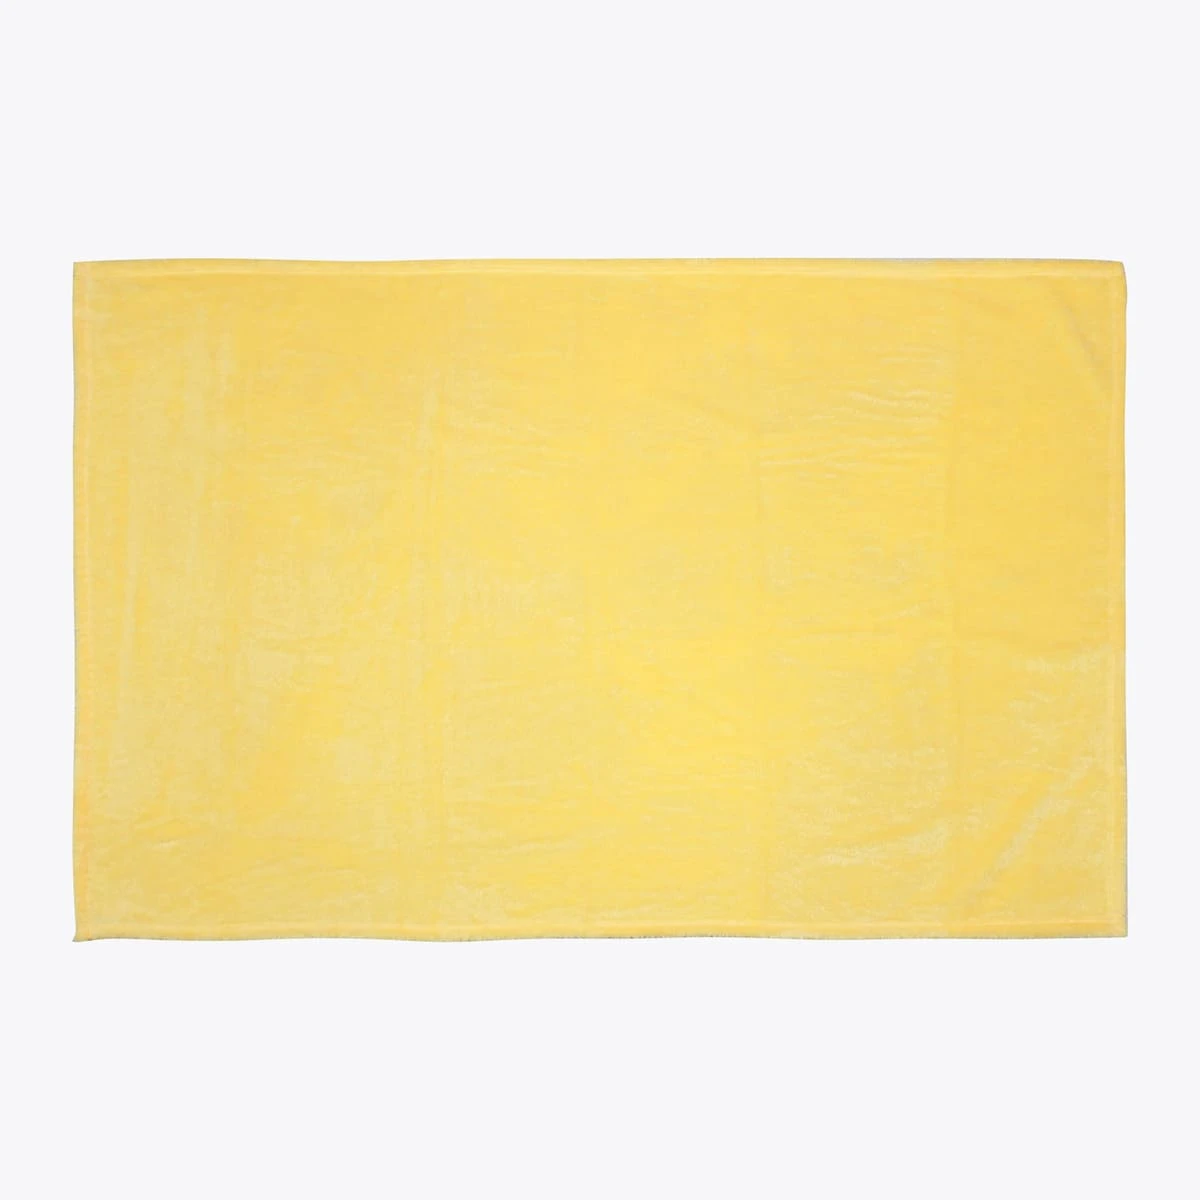 Keta V2 3D Embroidery Plush Tote Blanket (Yellow)